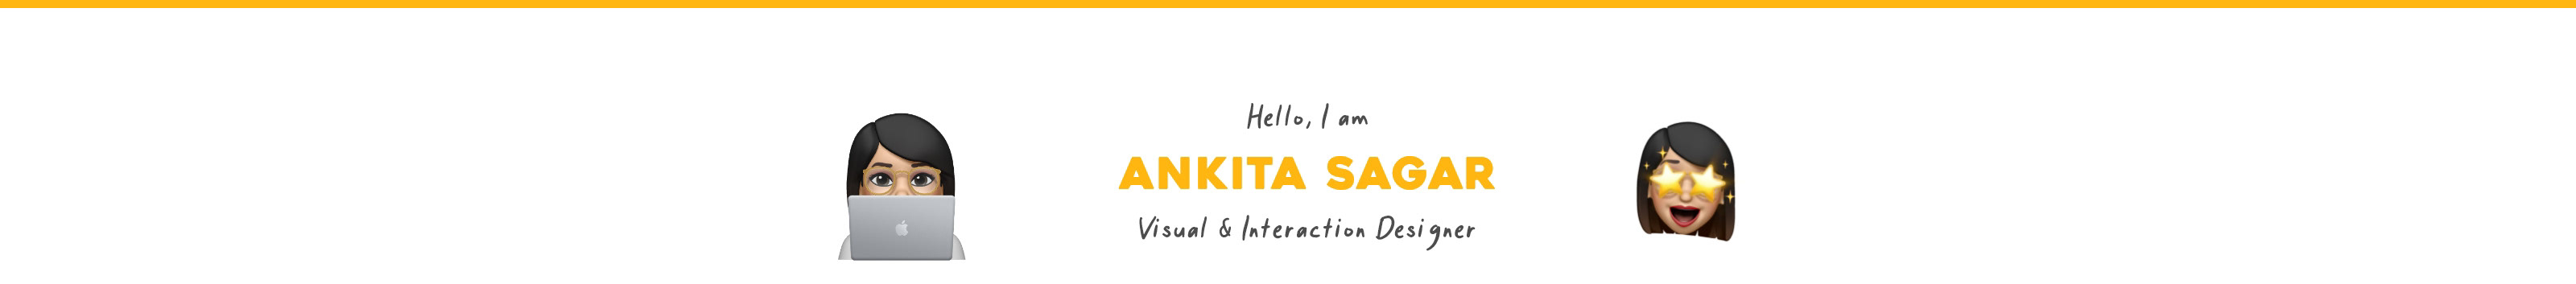 ankita sagar's profile banner